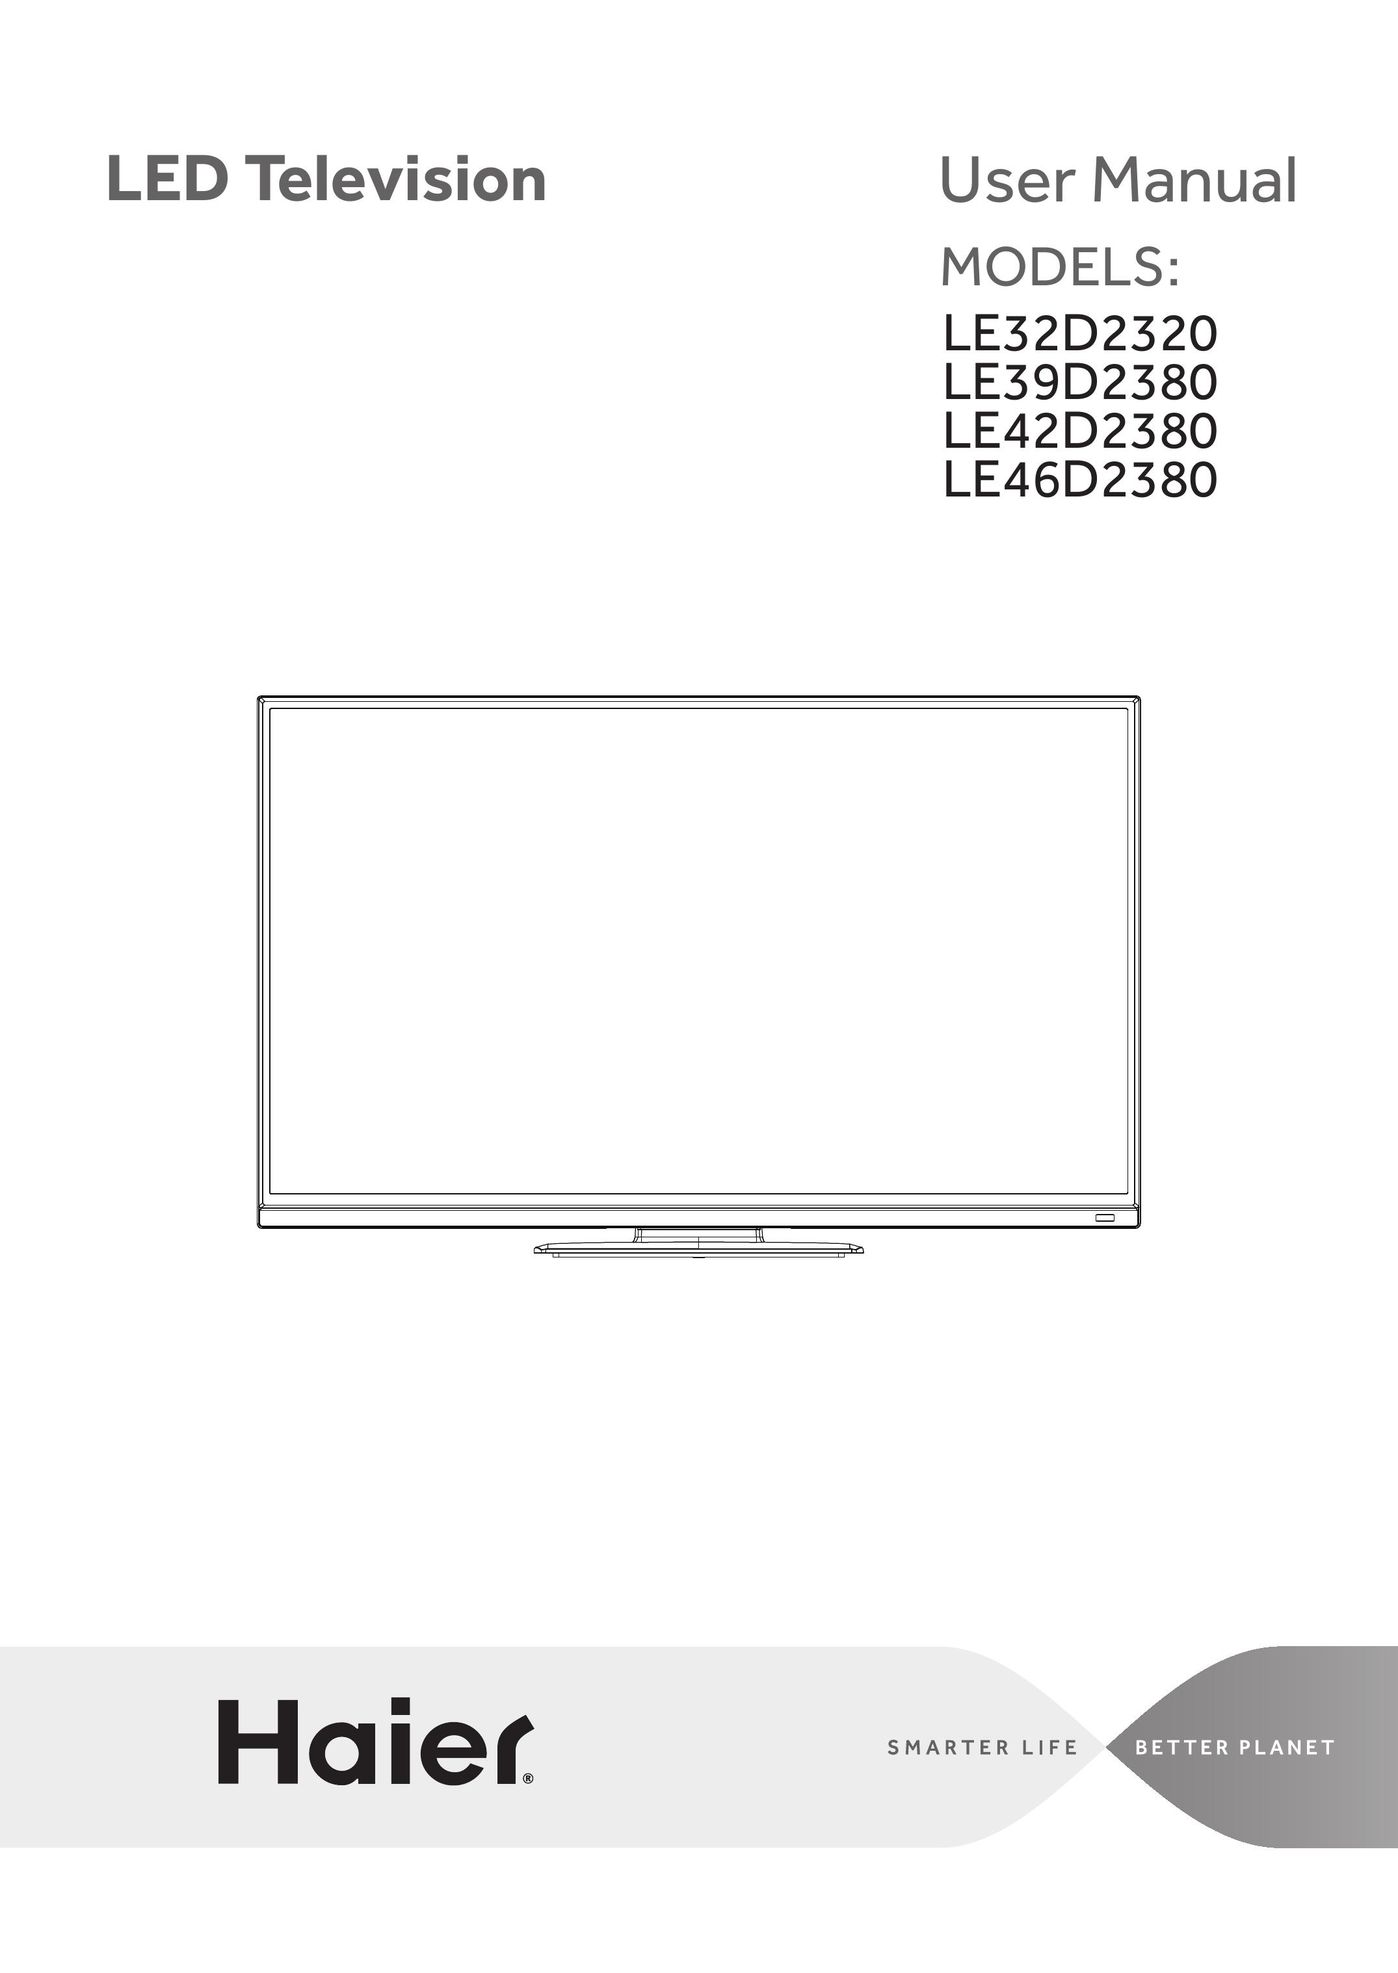 Haier LE46D2380 Car Satellite TV System User Manual